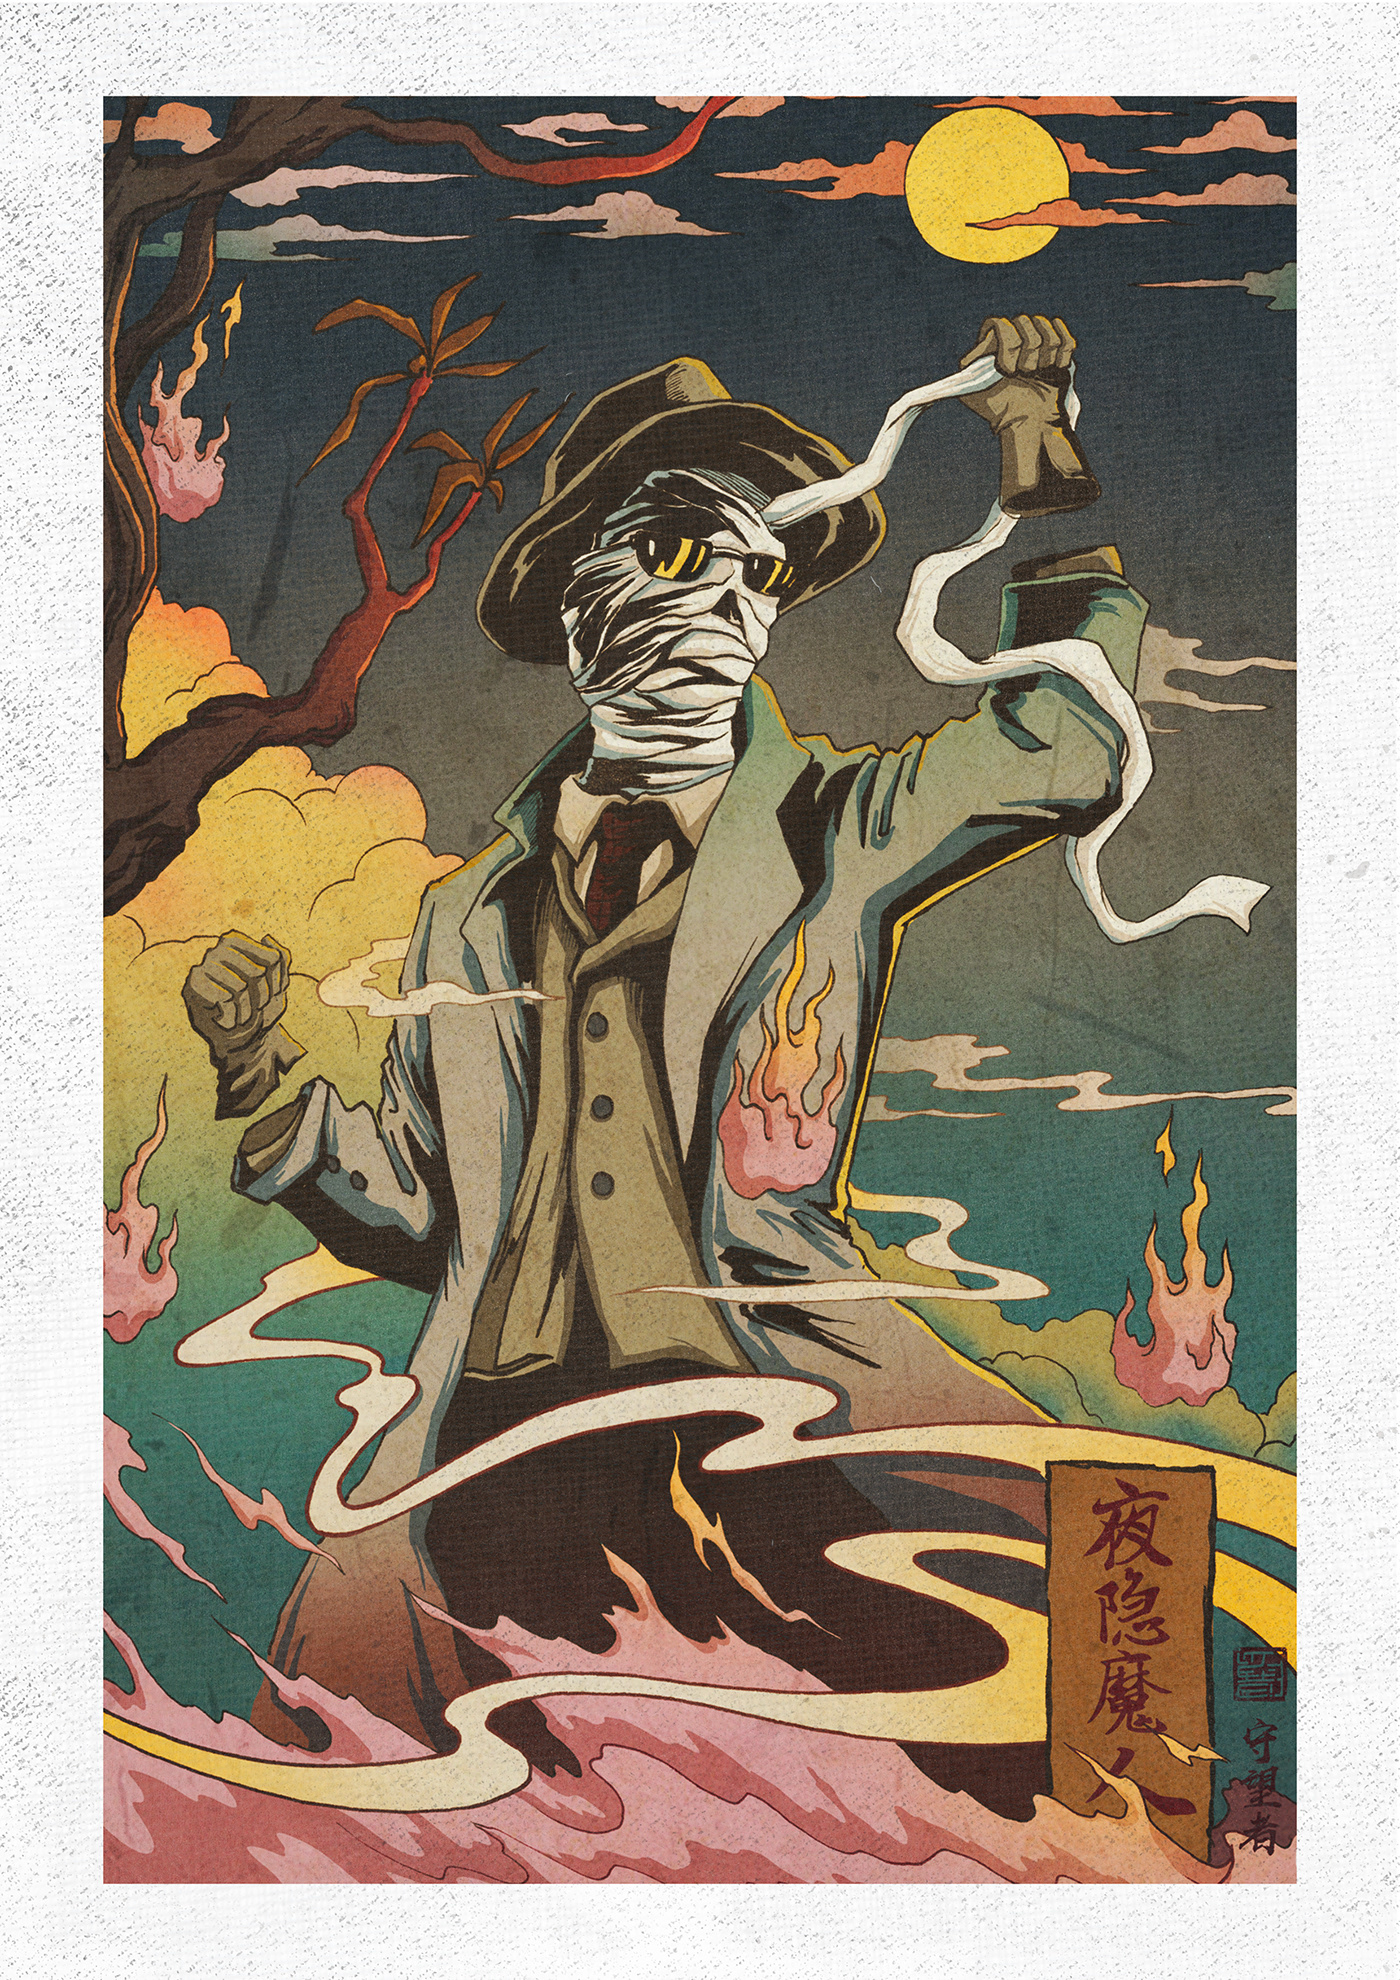 ILLUSTRATION  painting   Drawing  artist ukiyoe monster Character design  movie poster vintage japanese style